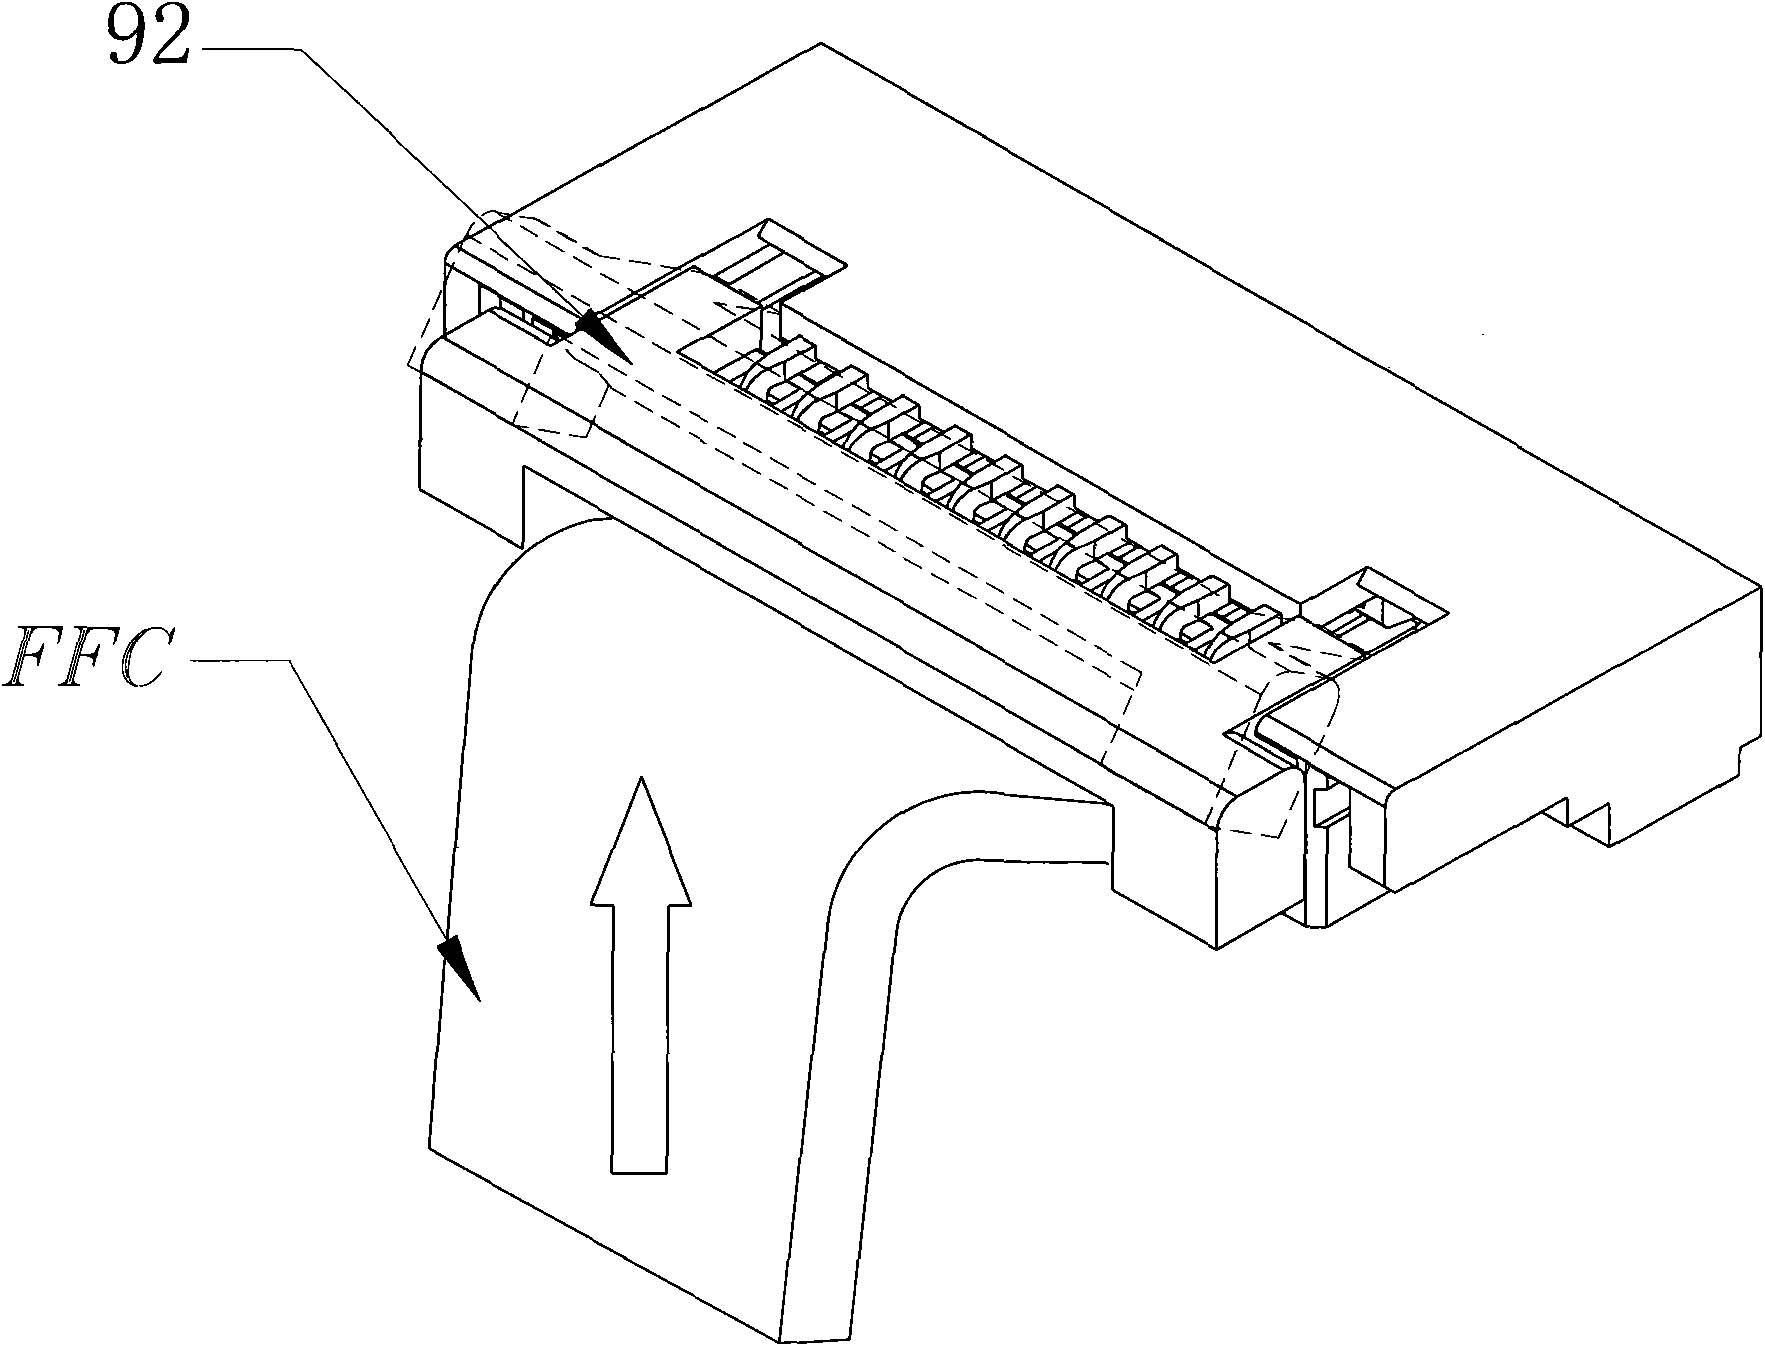 FPC (Flexible Printed Circuit) connector